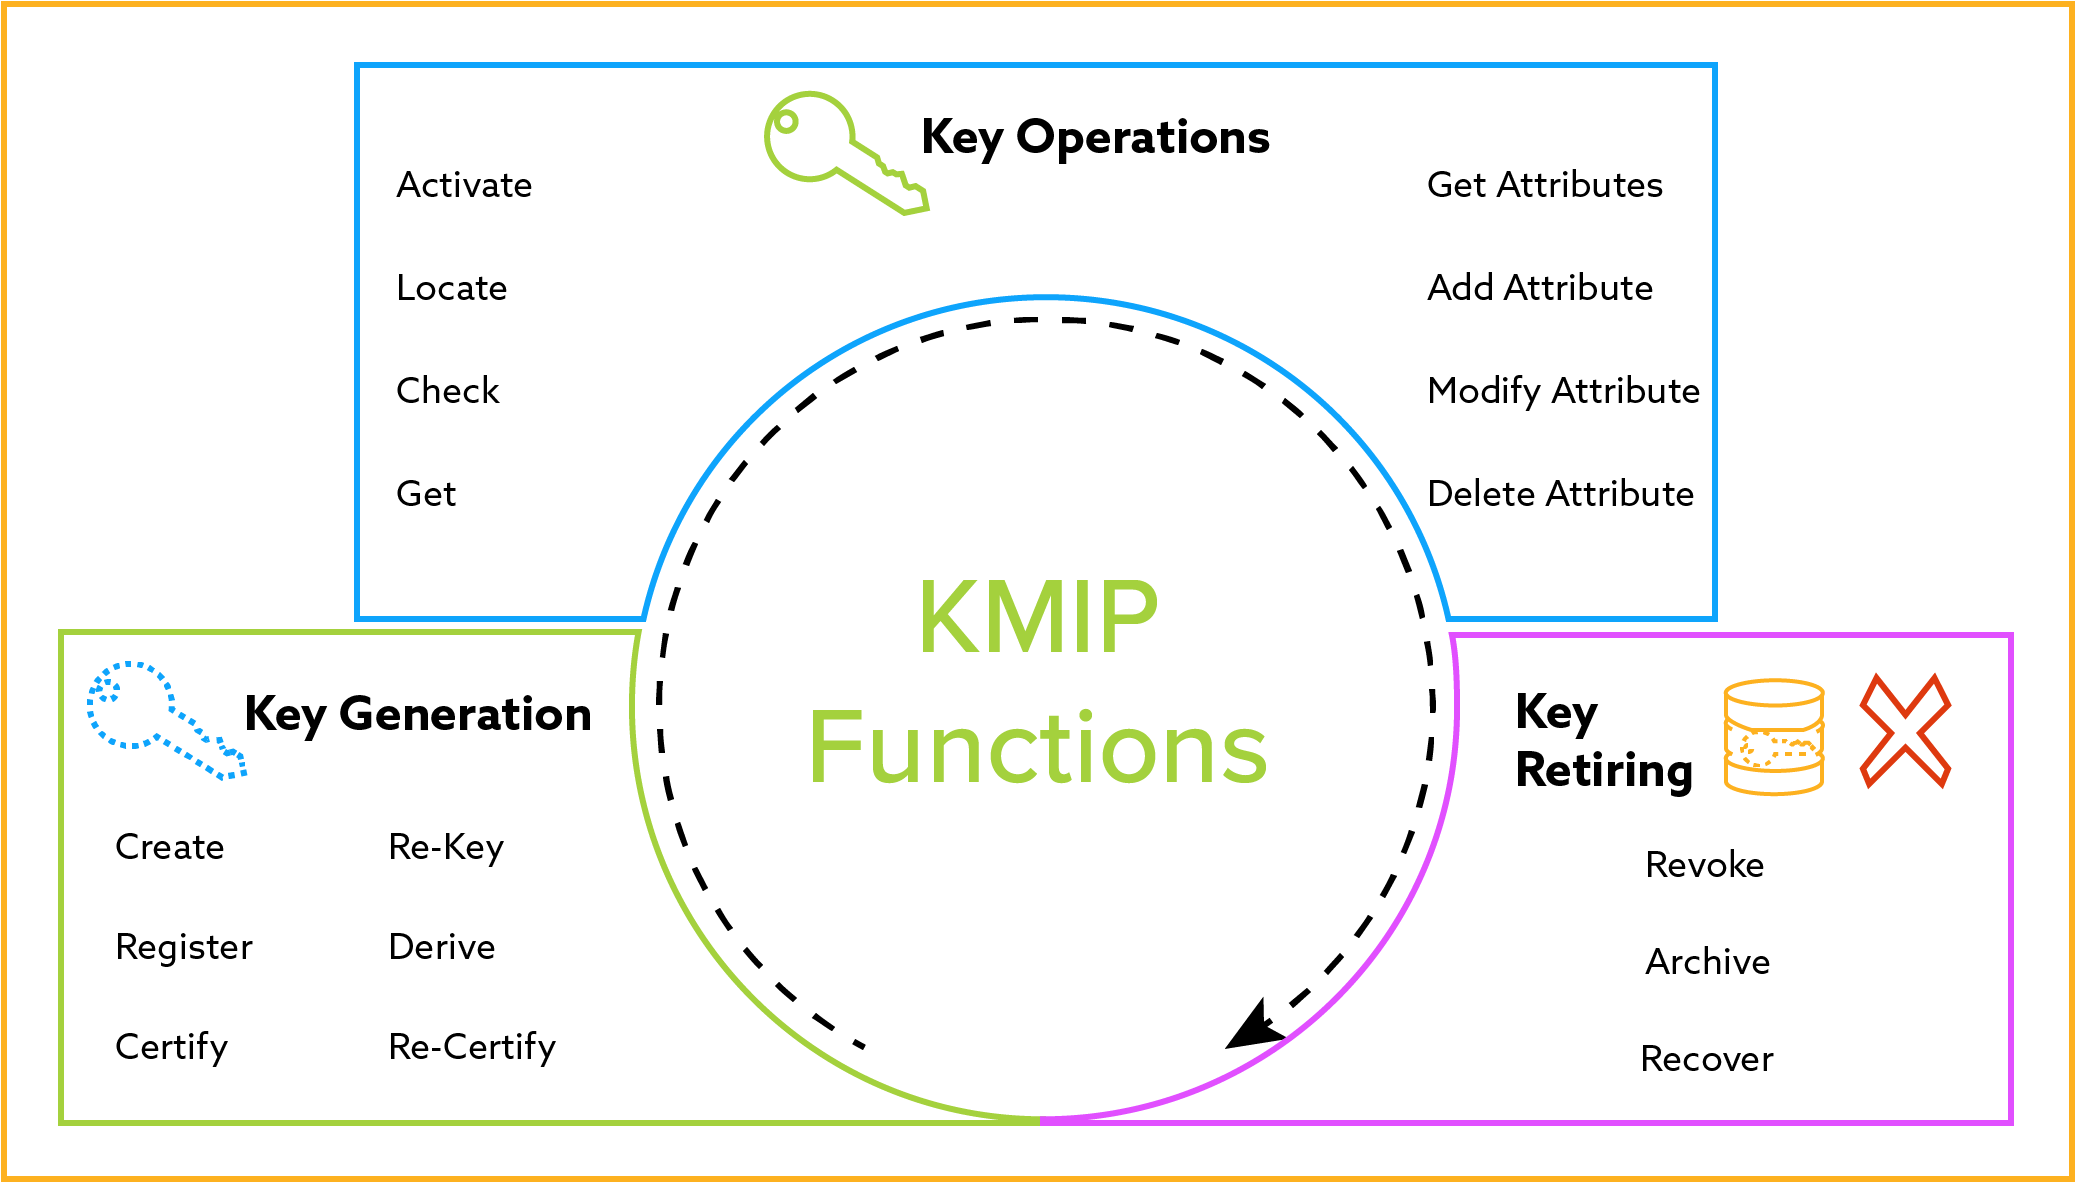 KMIP Functions